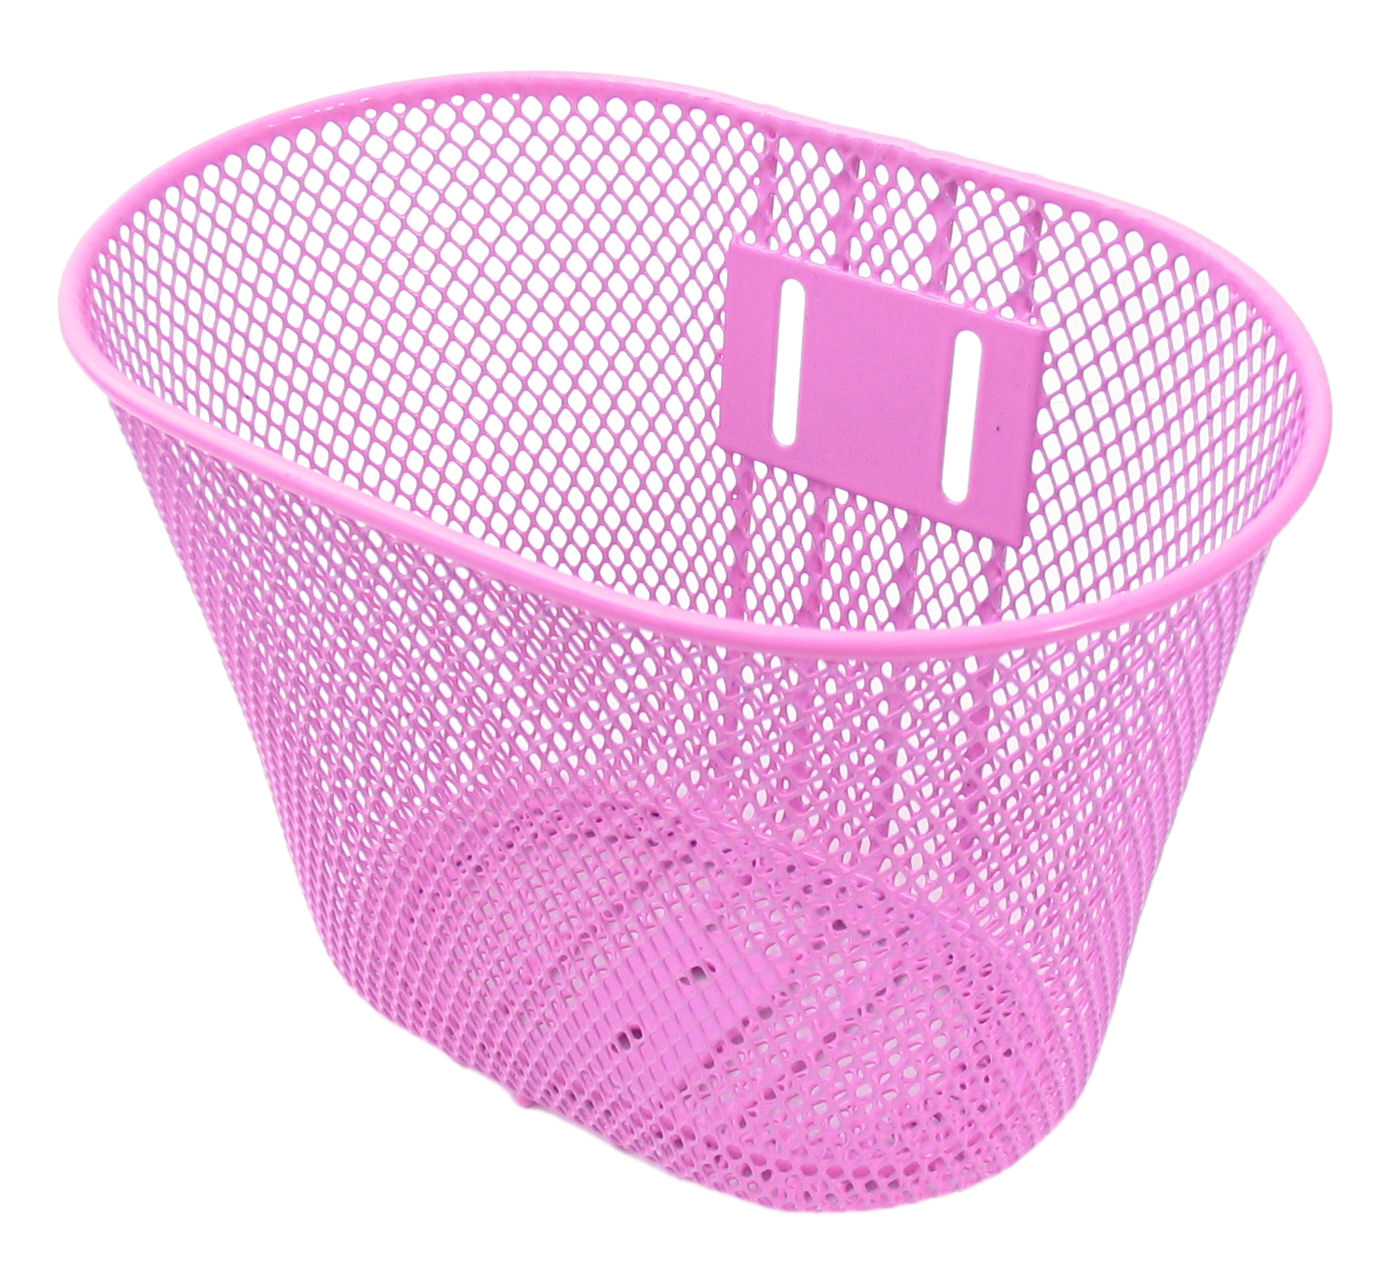 children's bicycle basket 8.5 liters pink